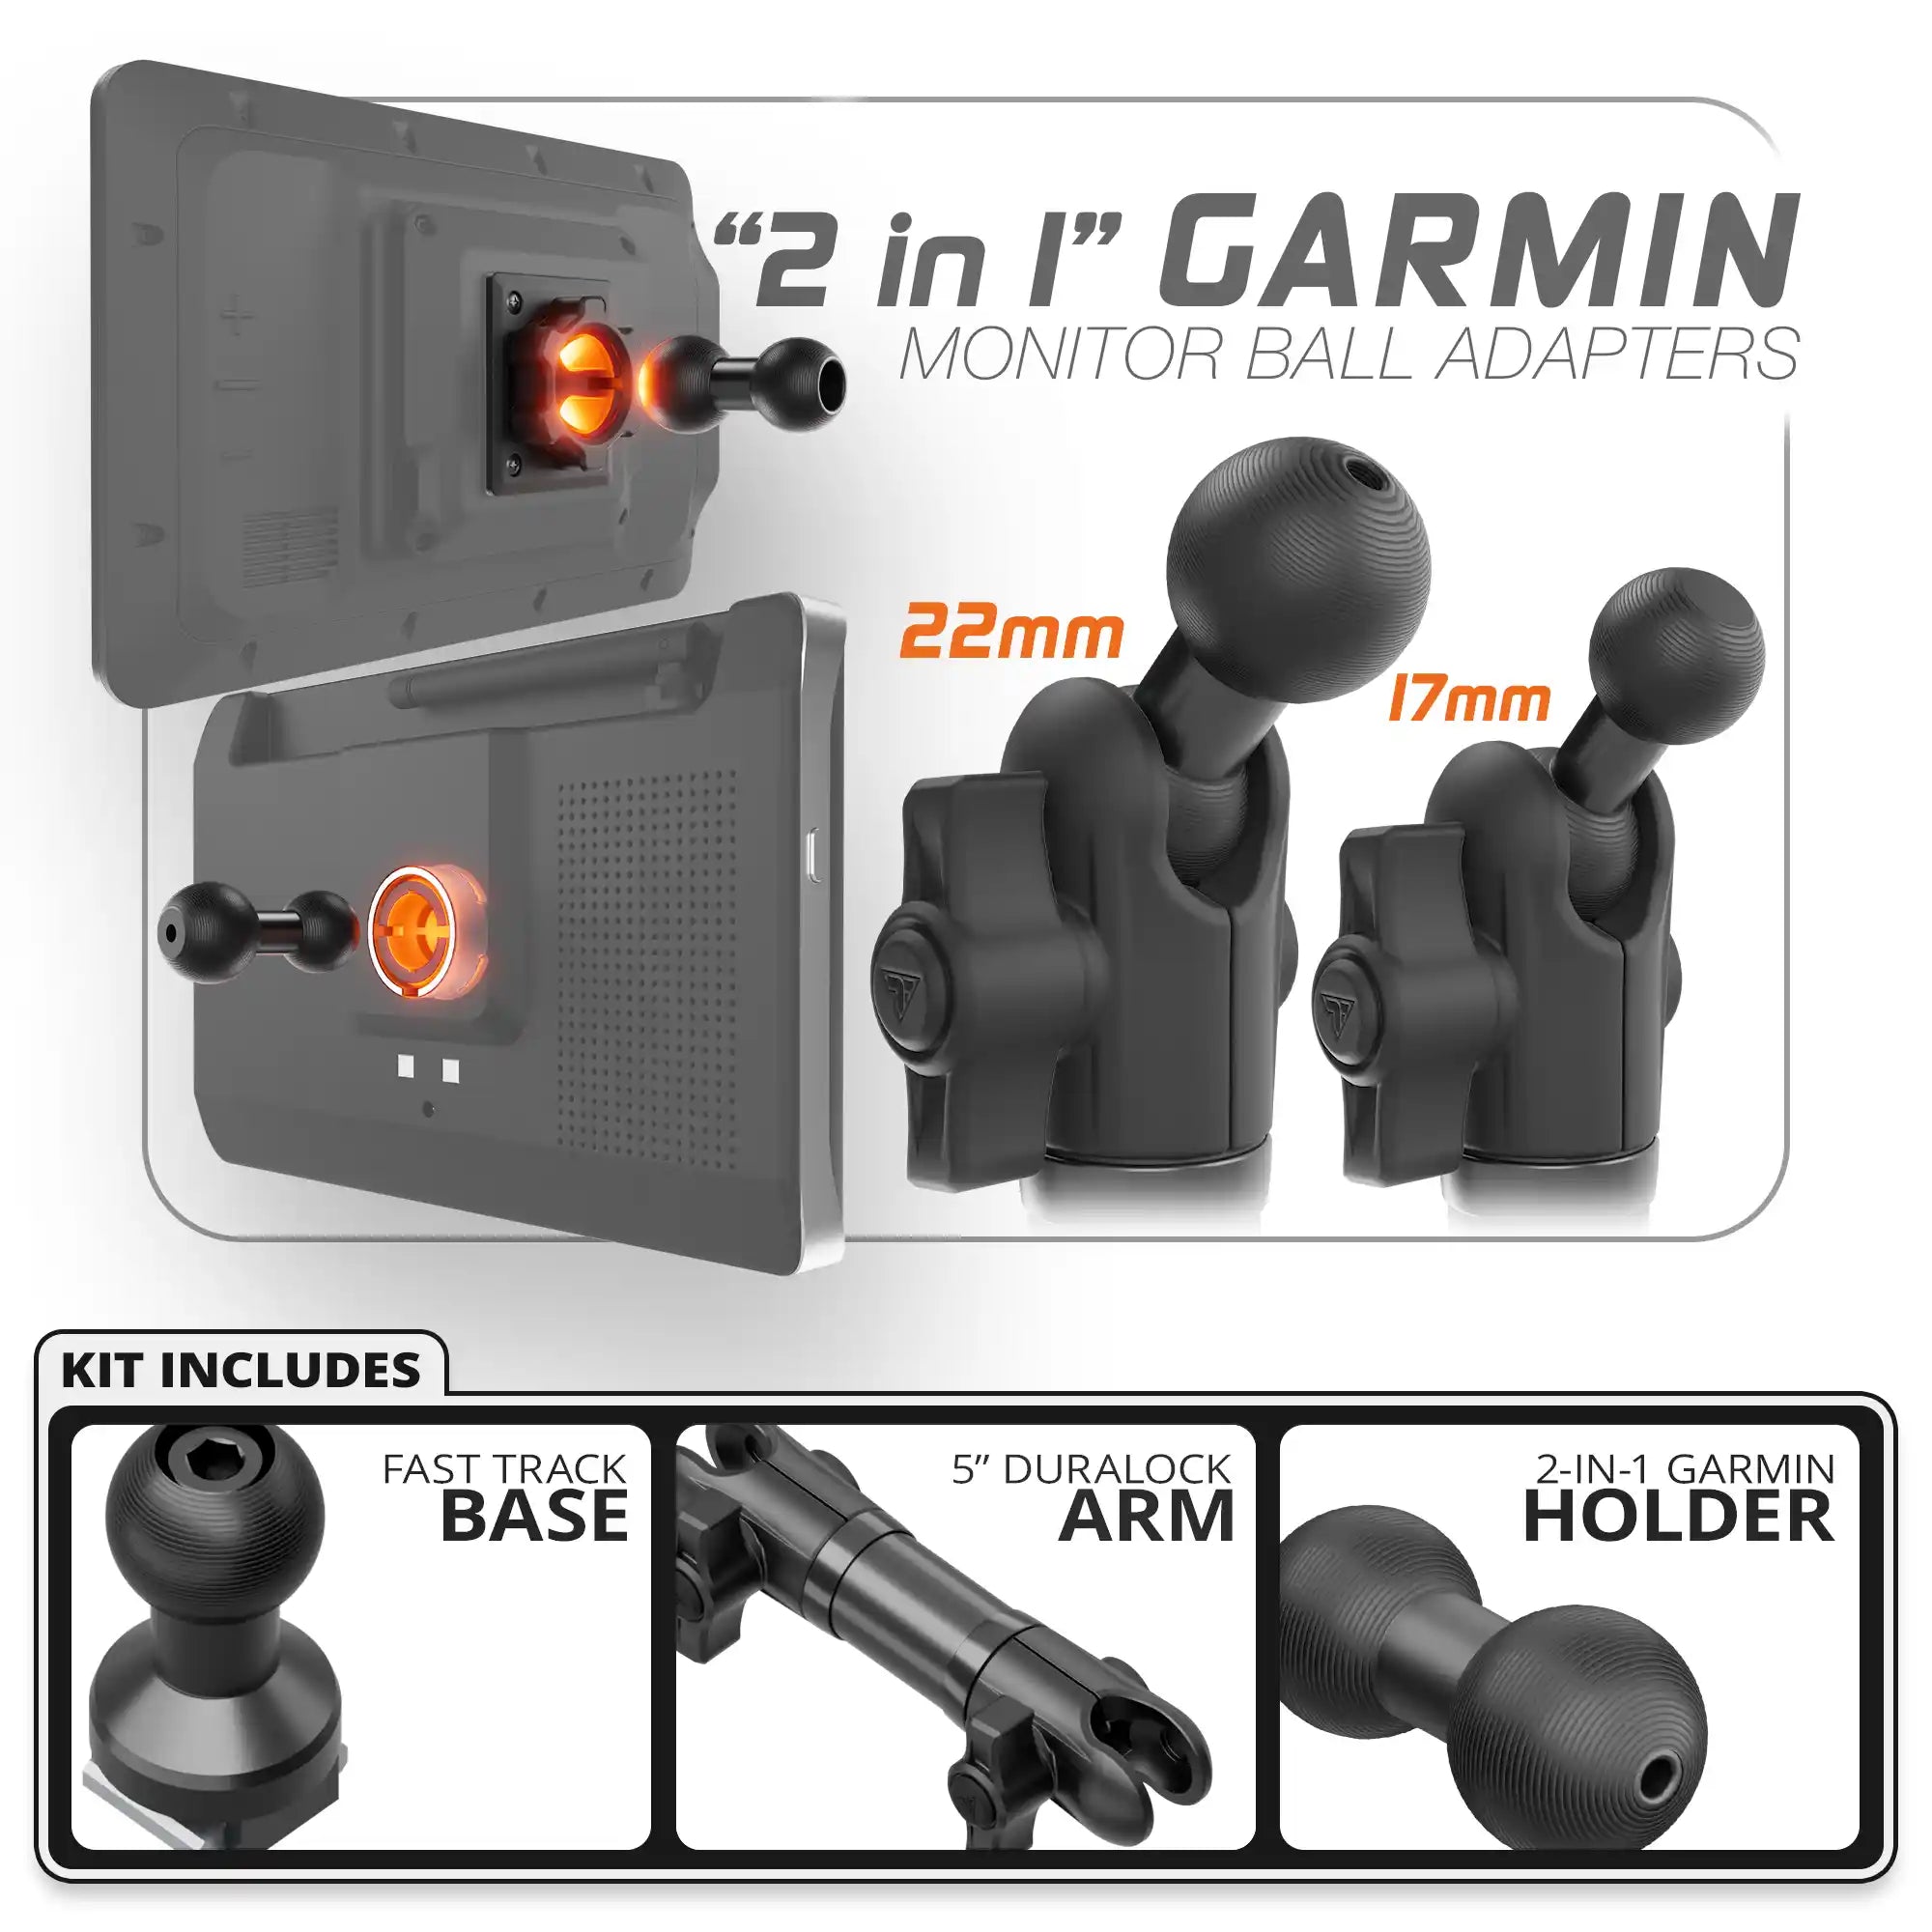 Garmin | Fast Track Base | 5" DuraLock Arm